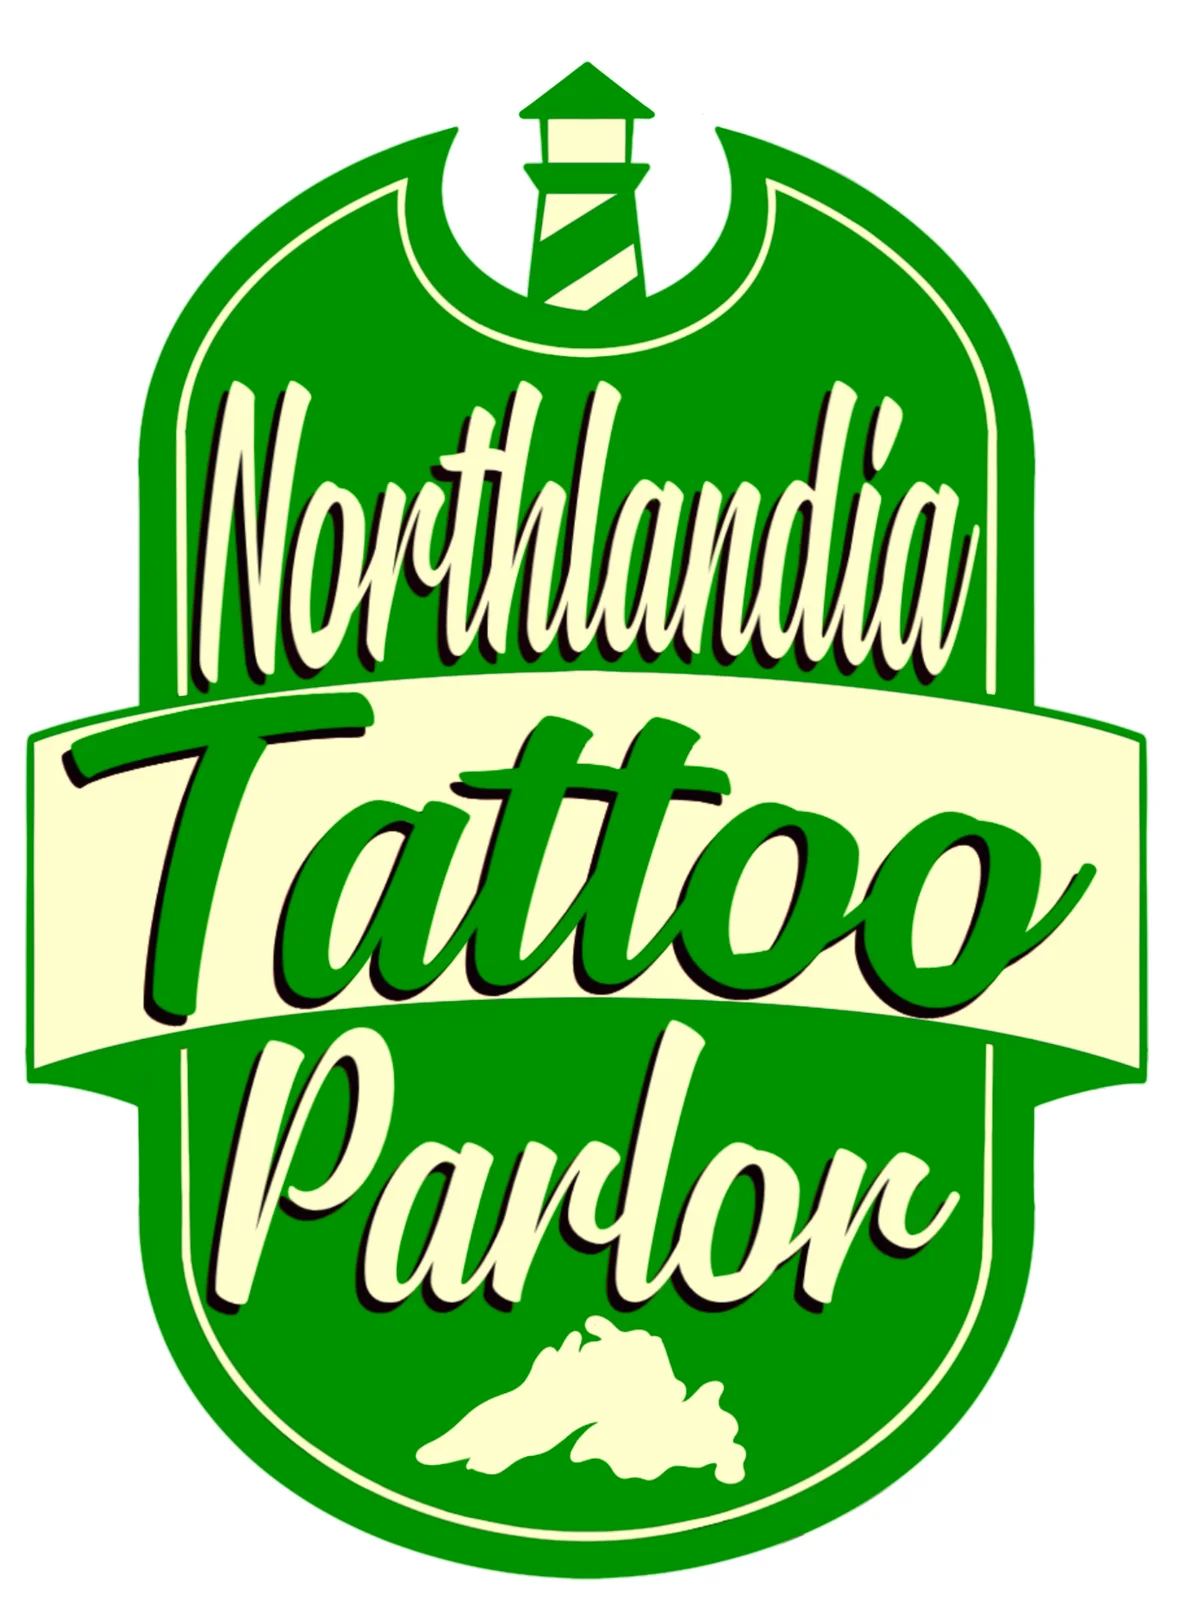 Northlandia tattoo Parlor.